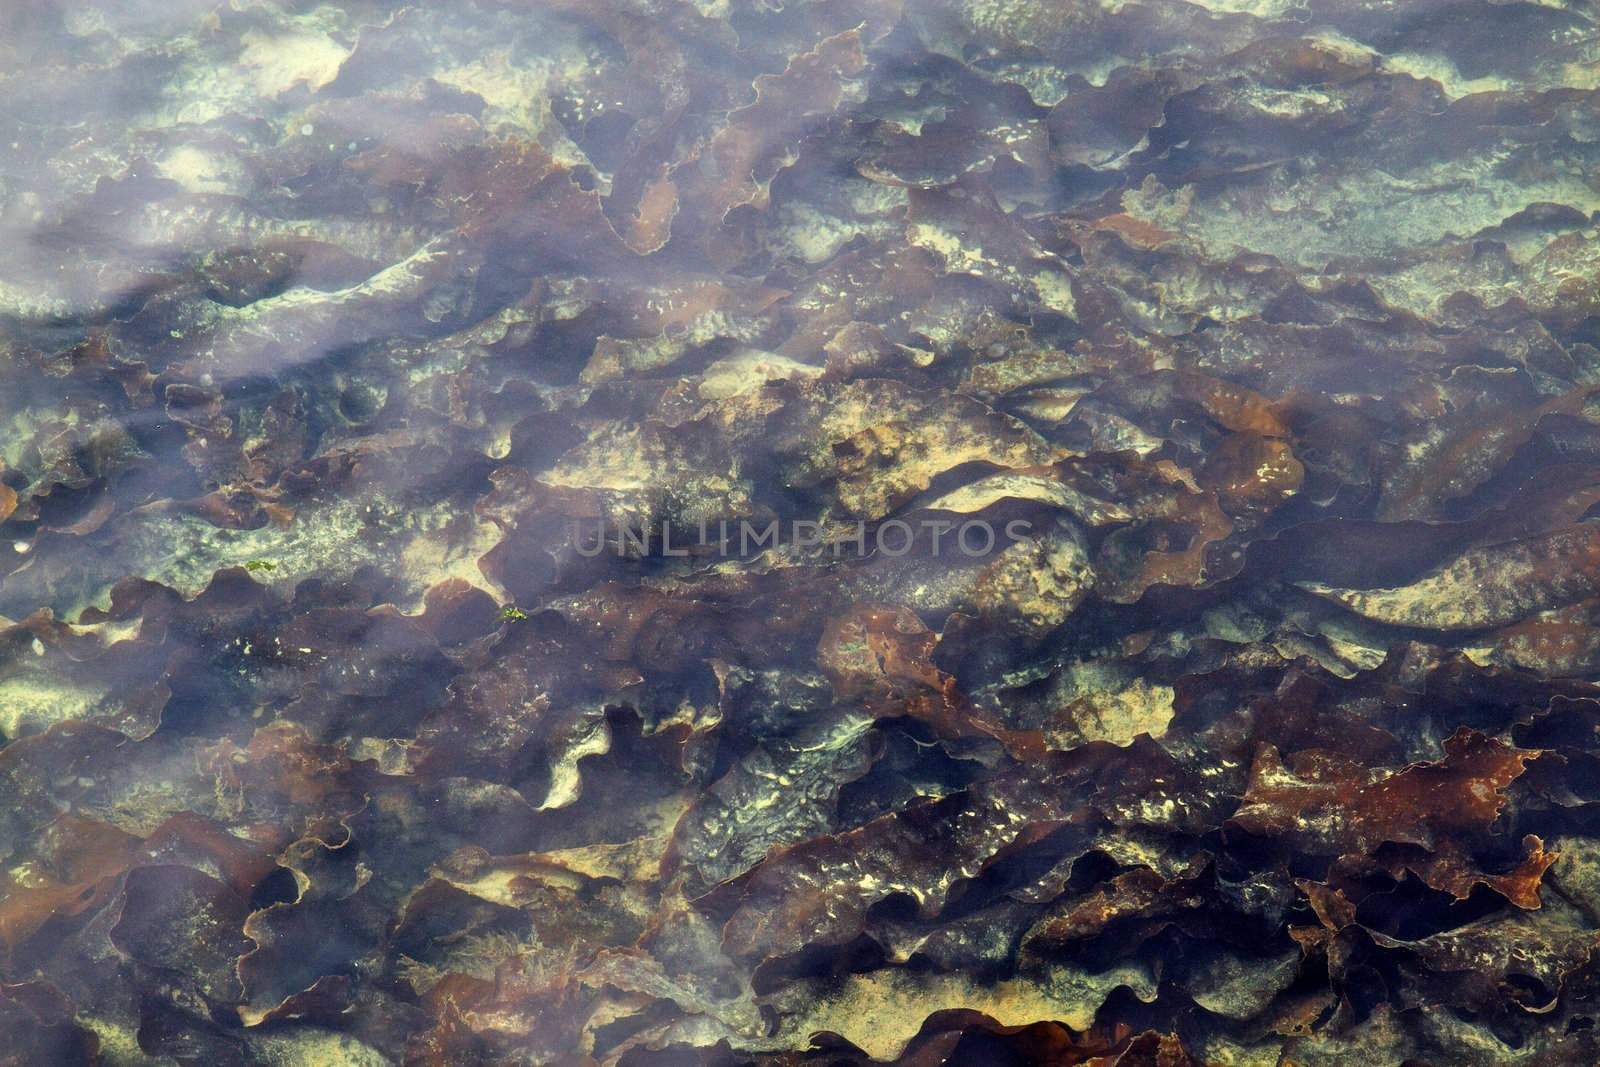 Sea weed reflections by bobkeenan